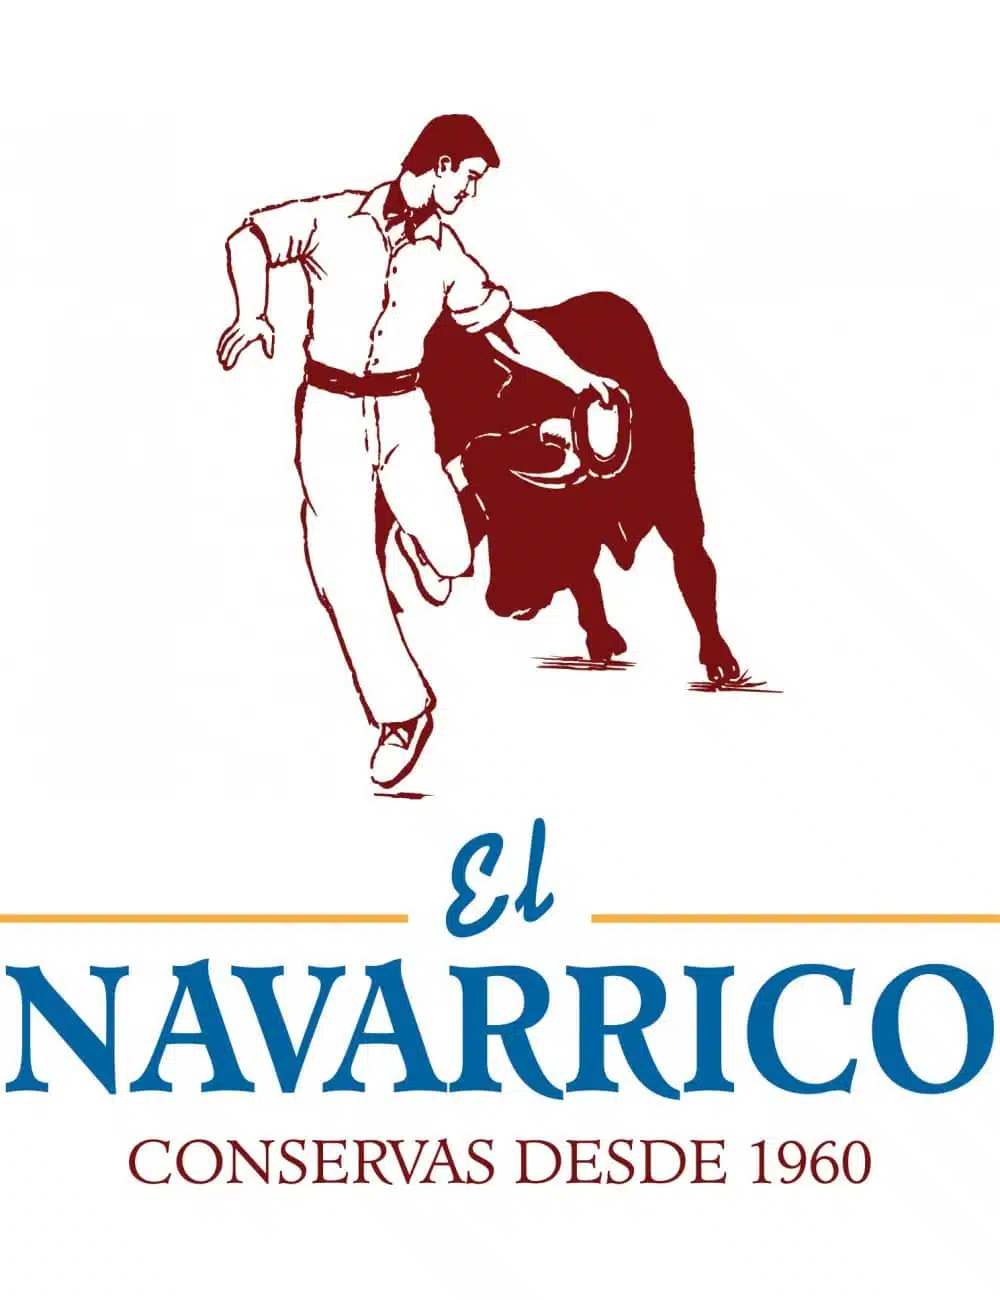 The Navarrico